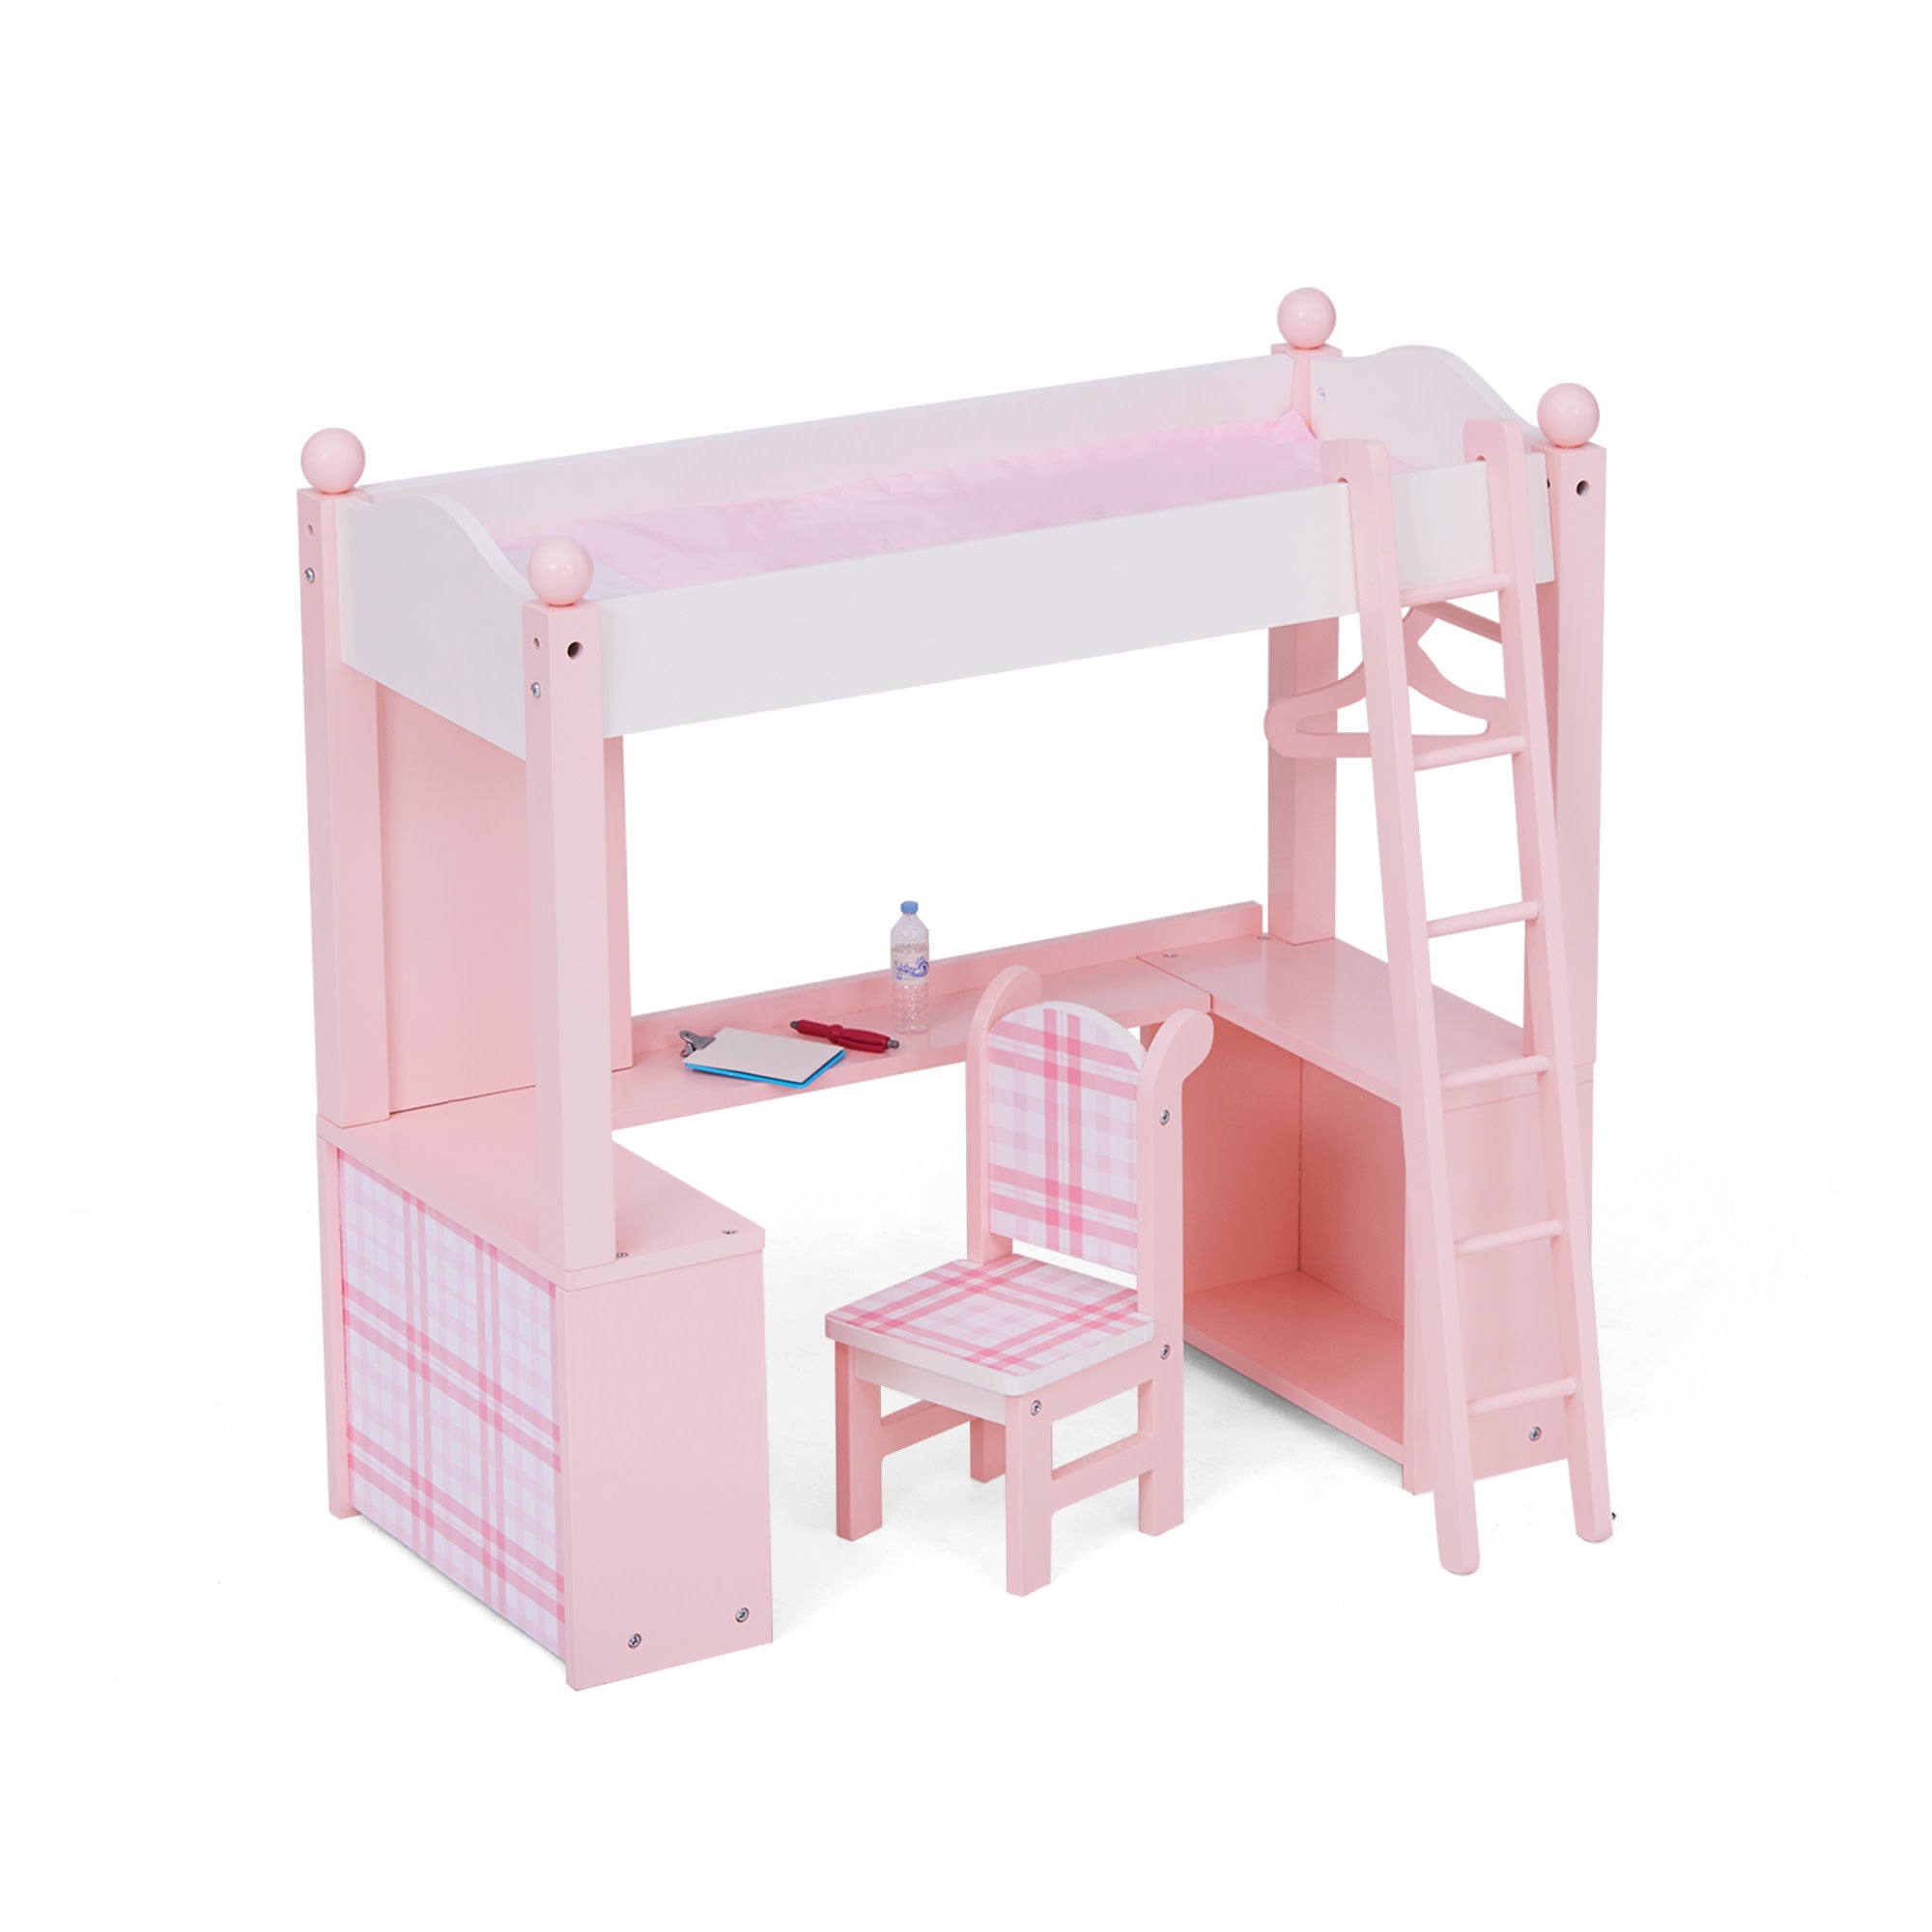 Sophia's Aurora Princess Plaid Loft Bed, Desk, Chair, & Play Accessories for 18" Dolls, Pink